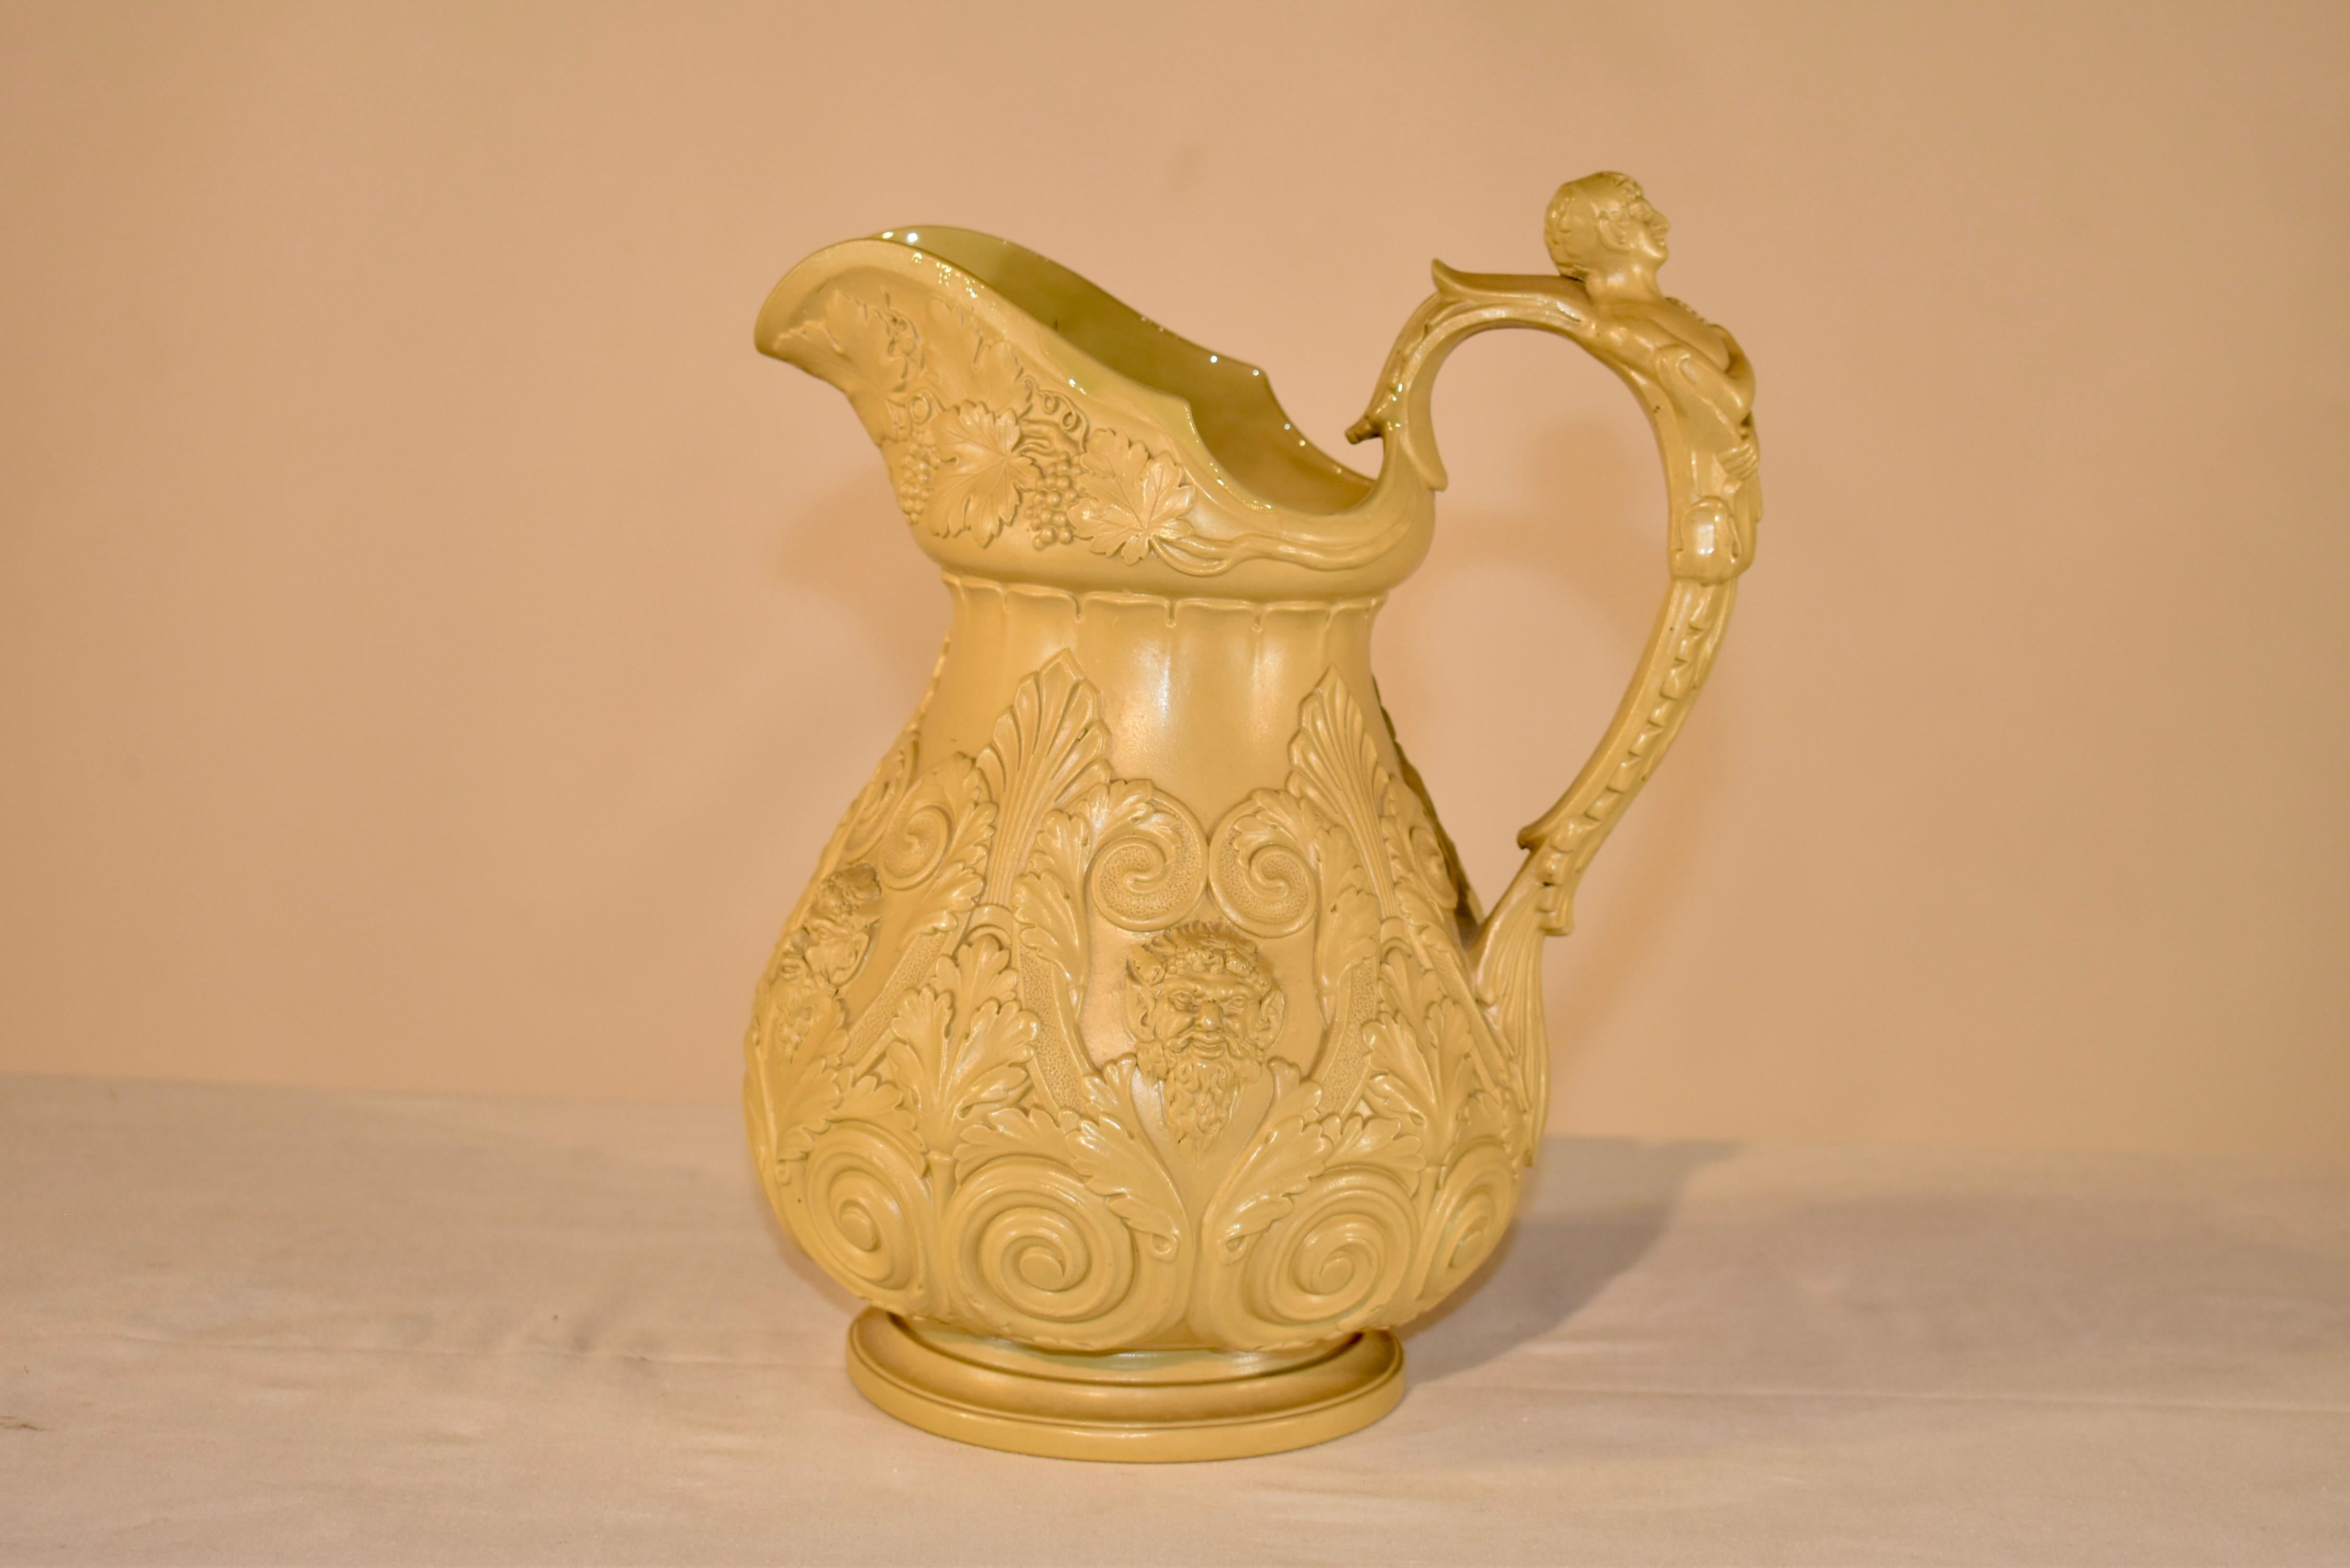 drabware pottery